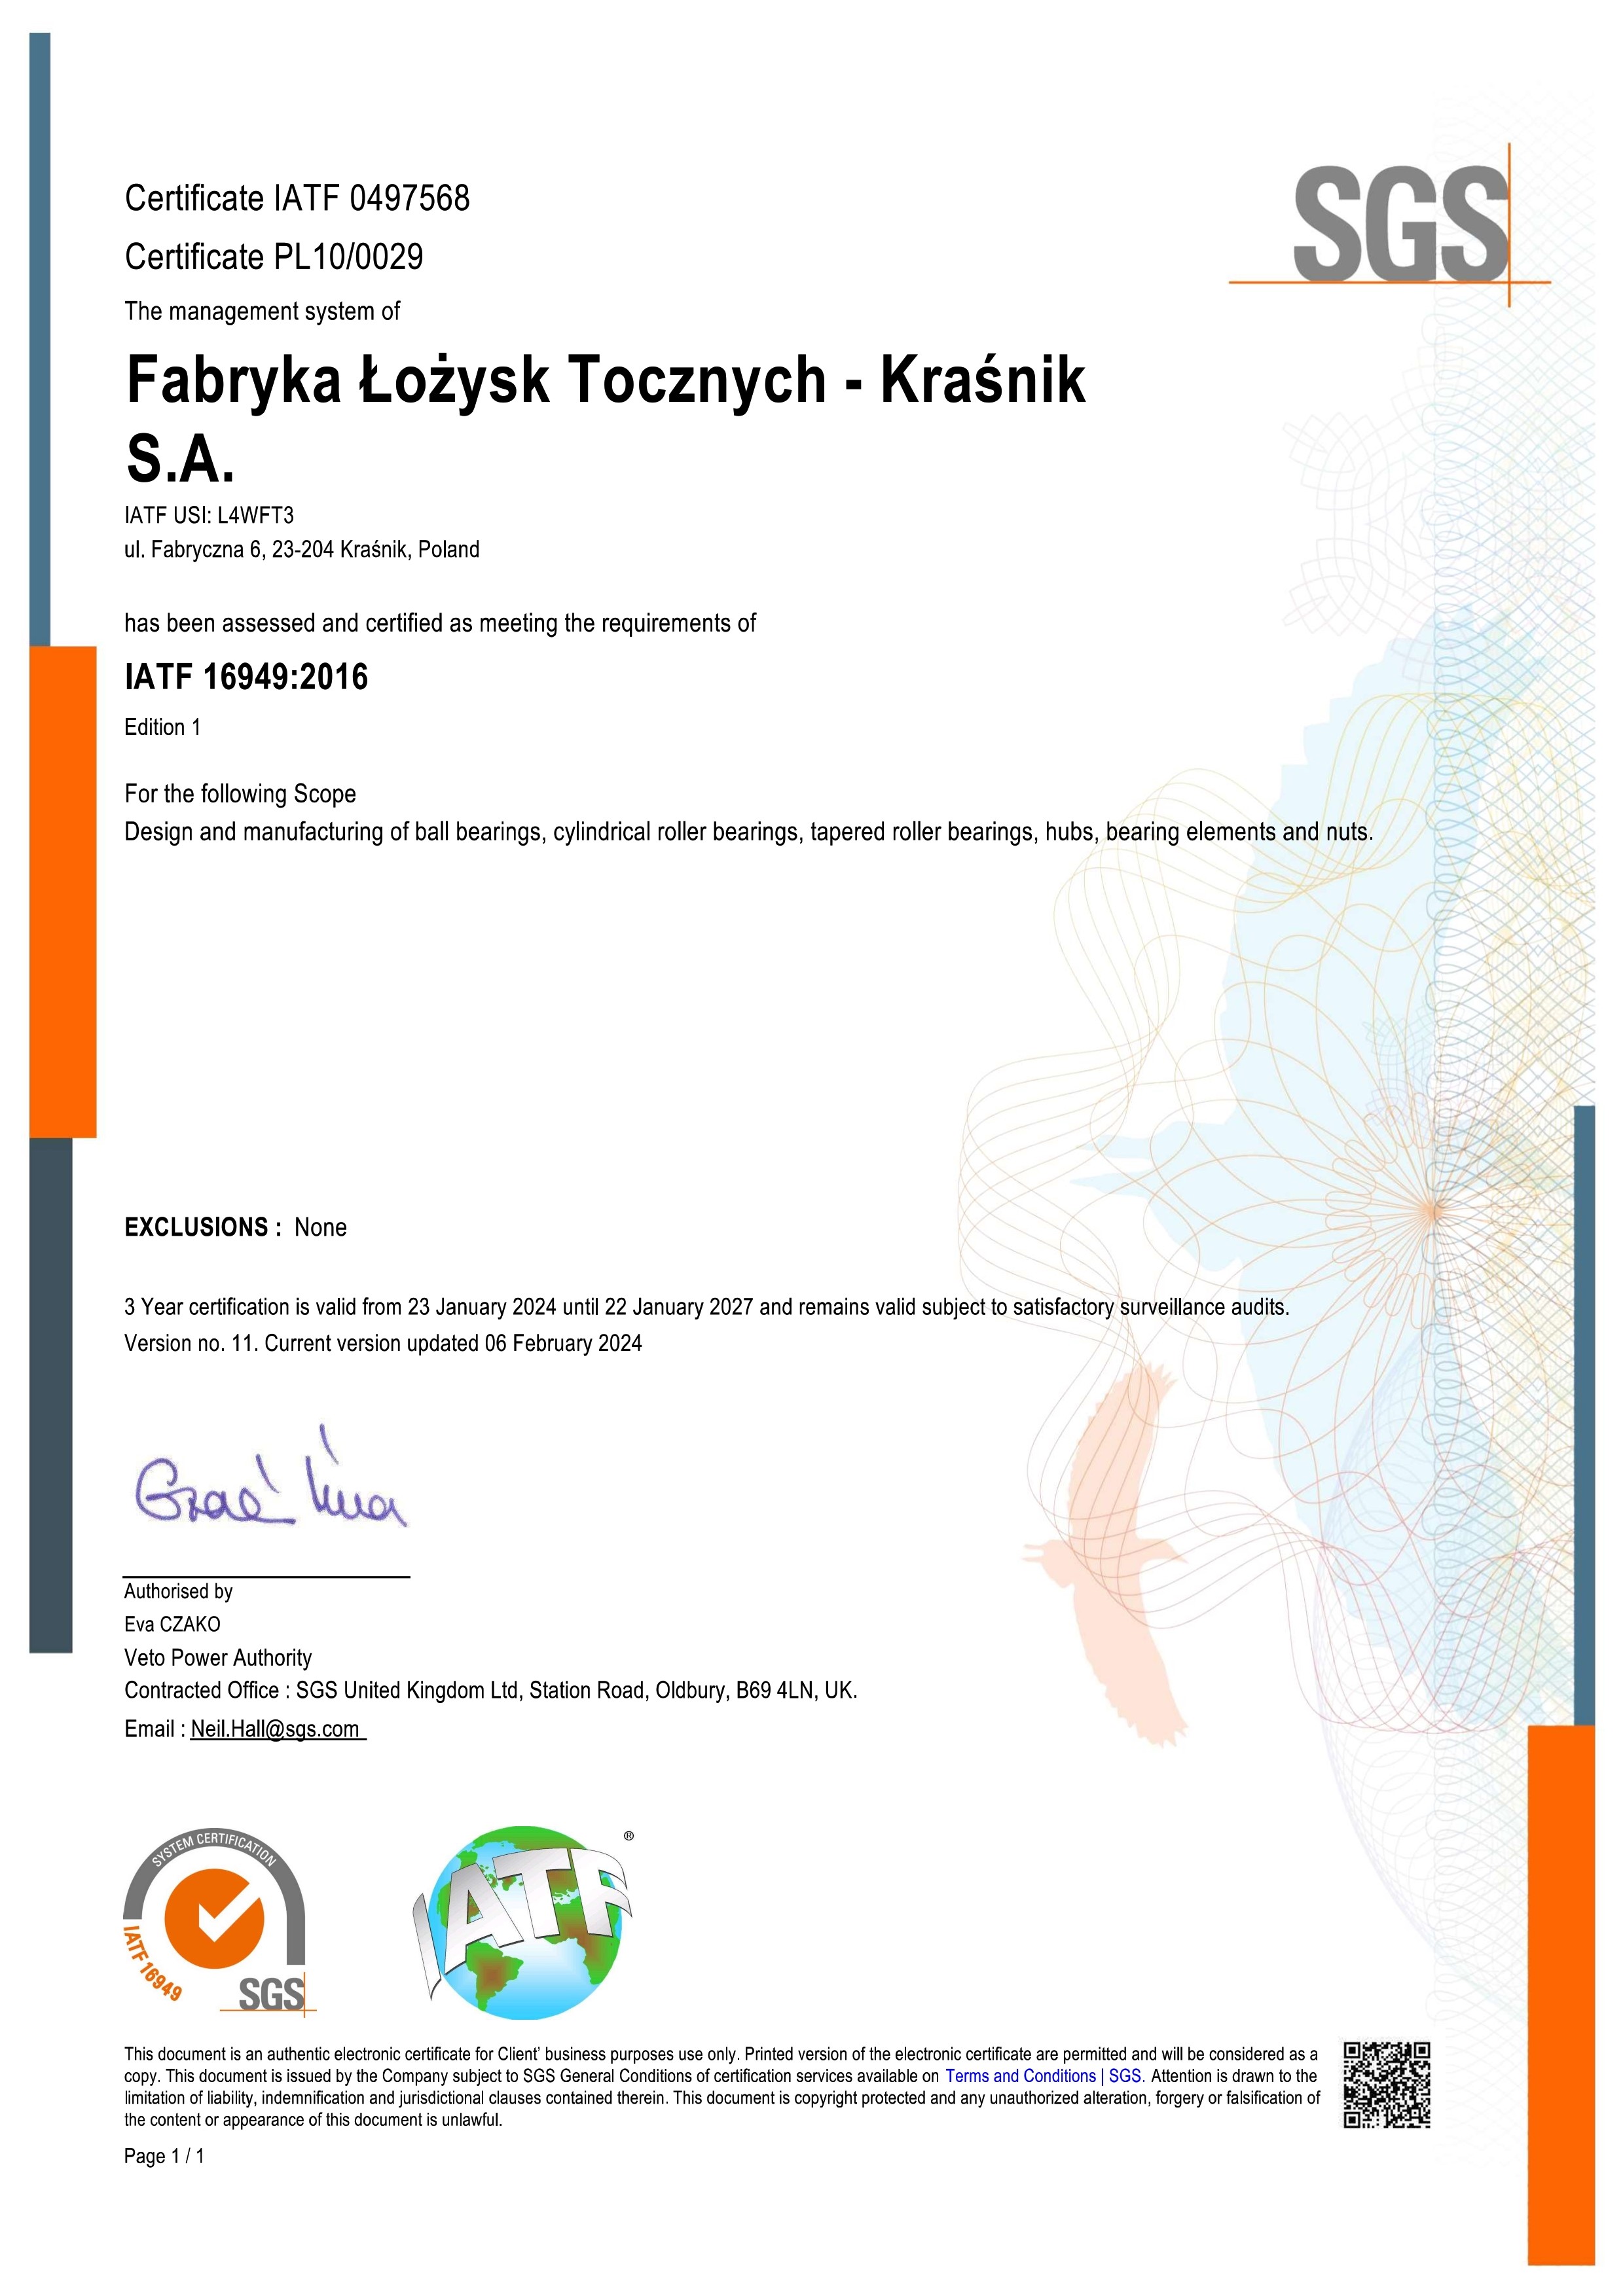 FLT Krasnik Certificate IATF 2024 001